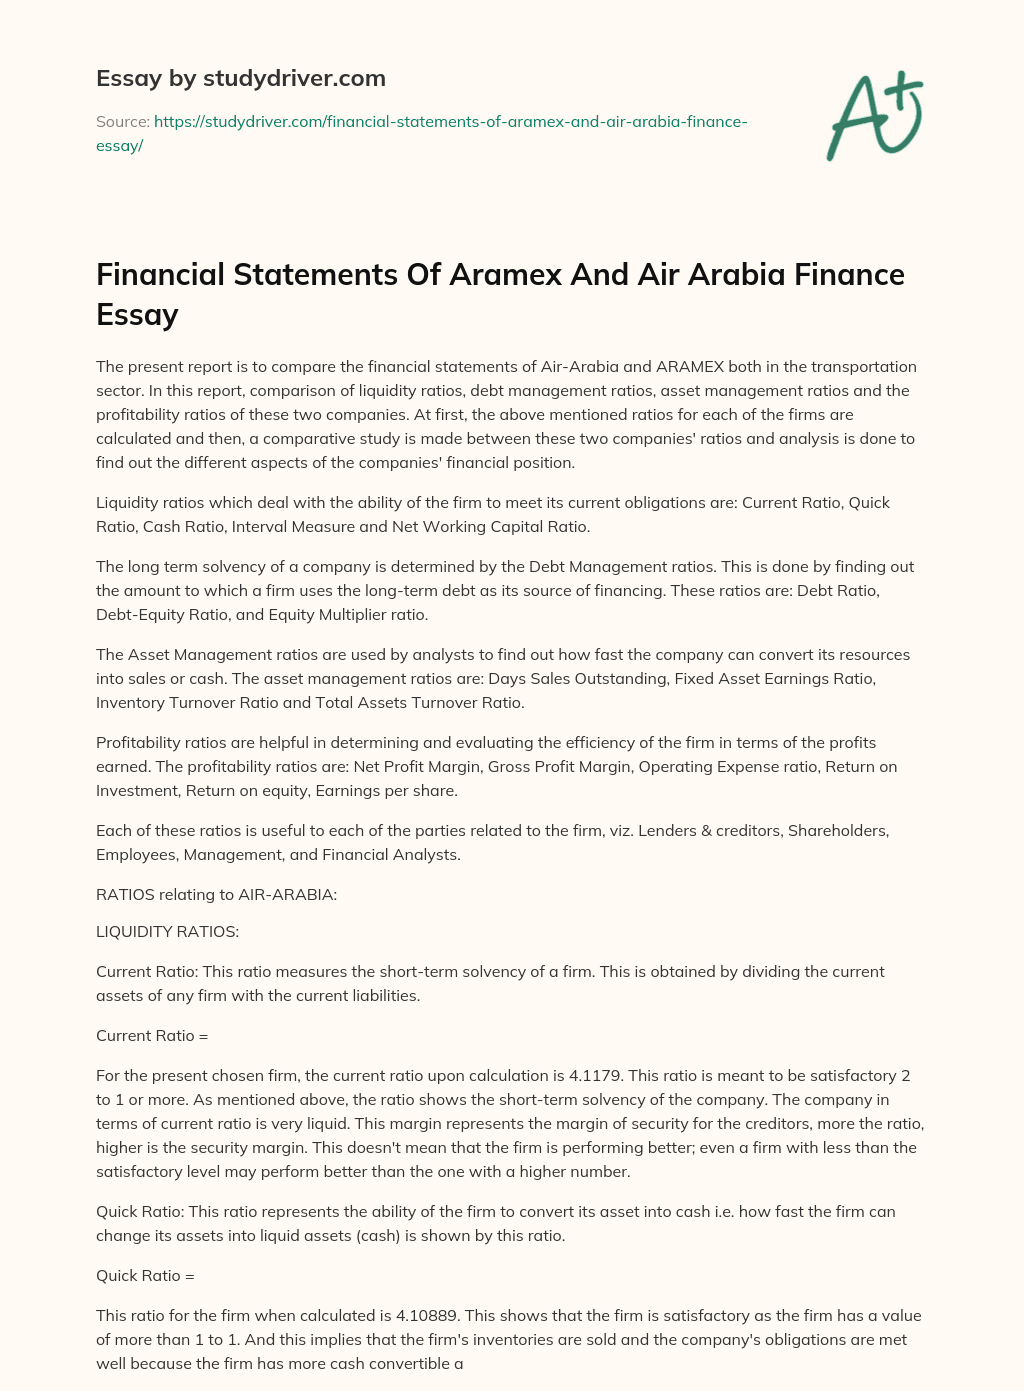 Financial Statements of Aramex and Air Arabia Finance Essay essay